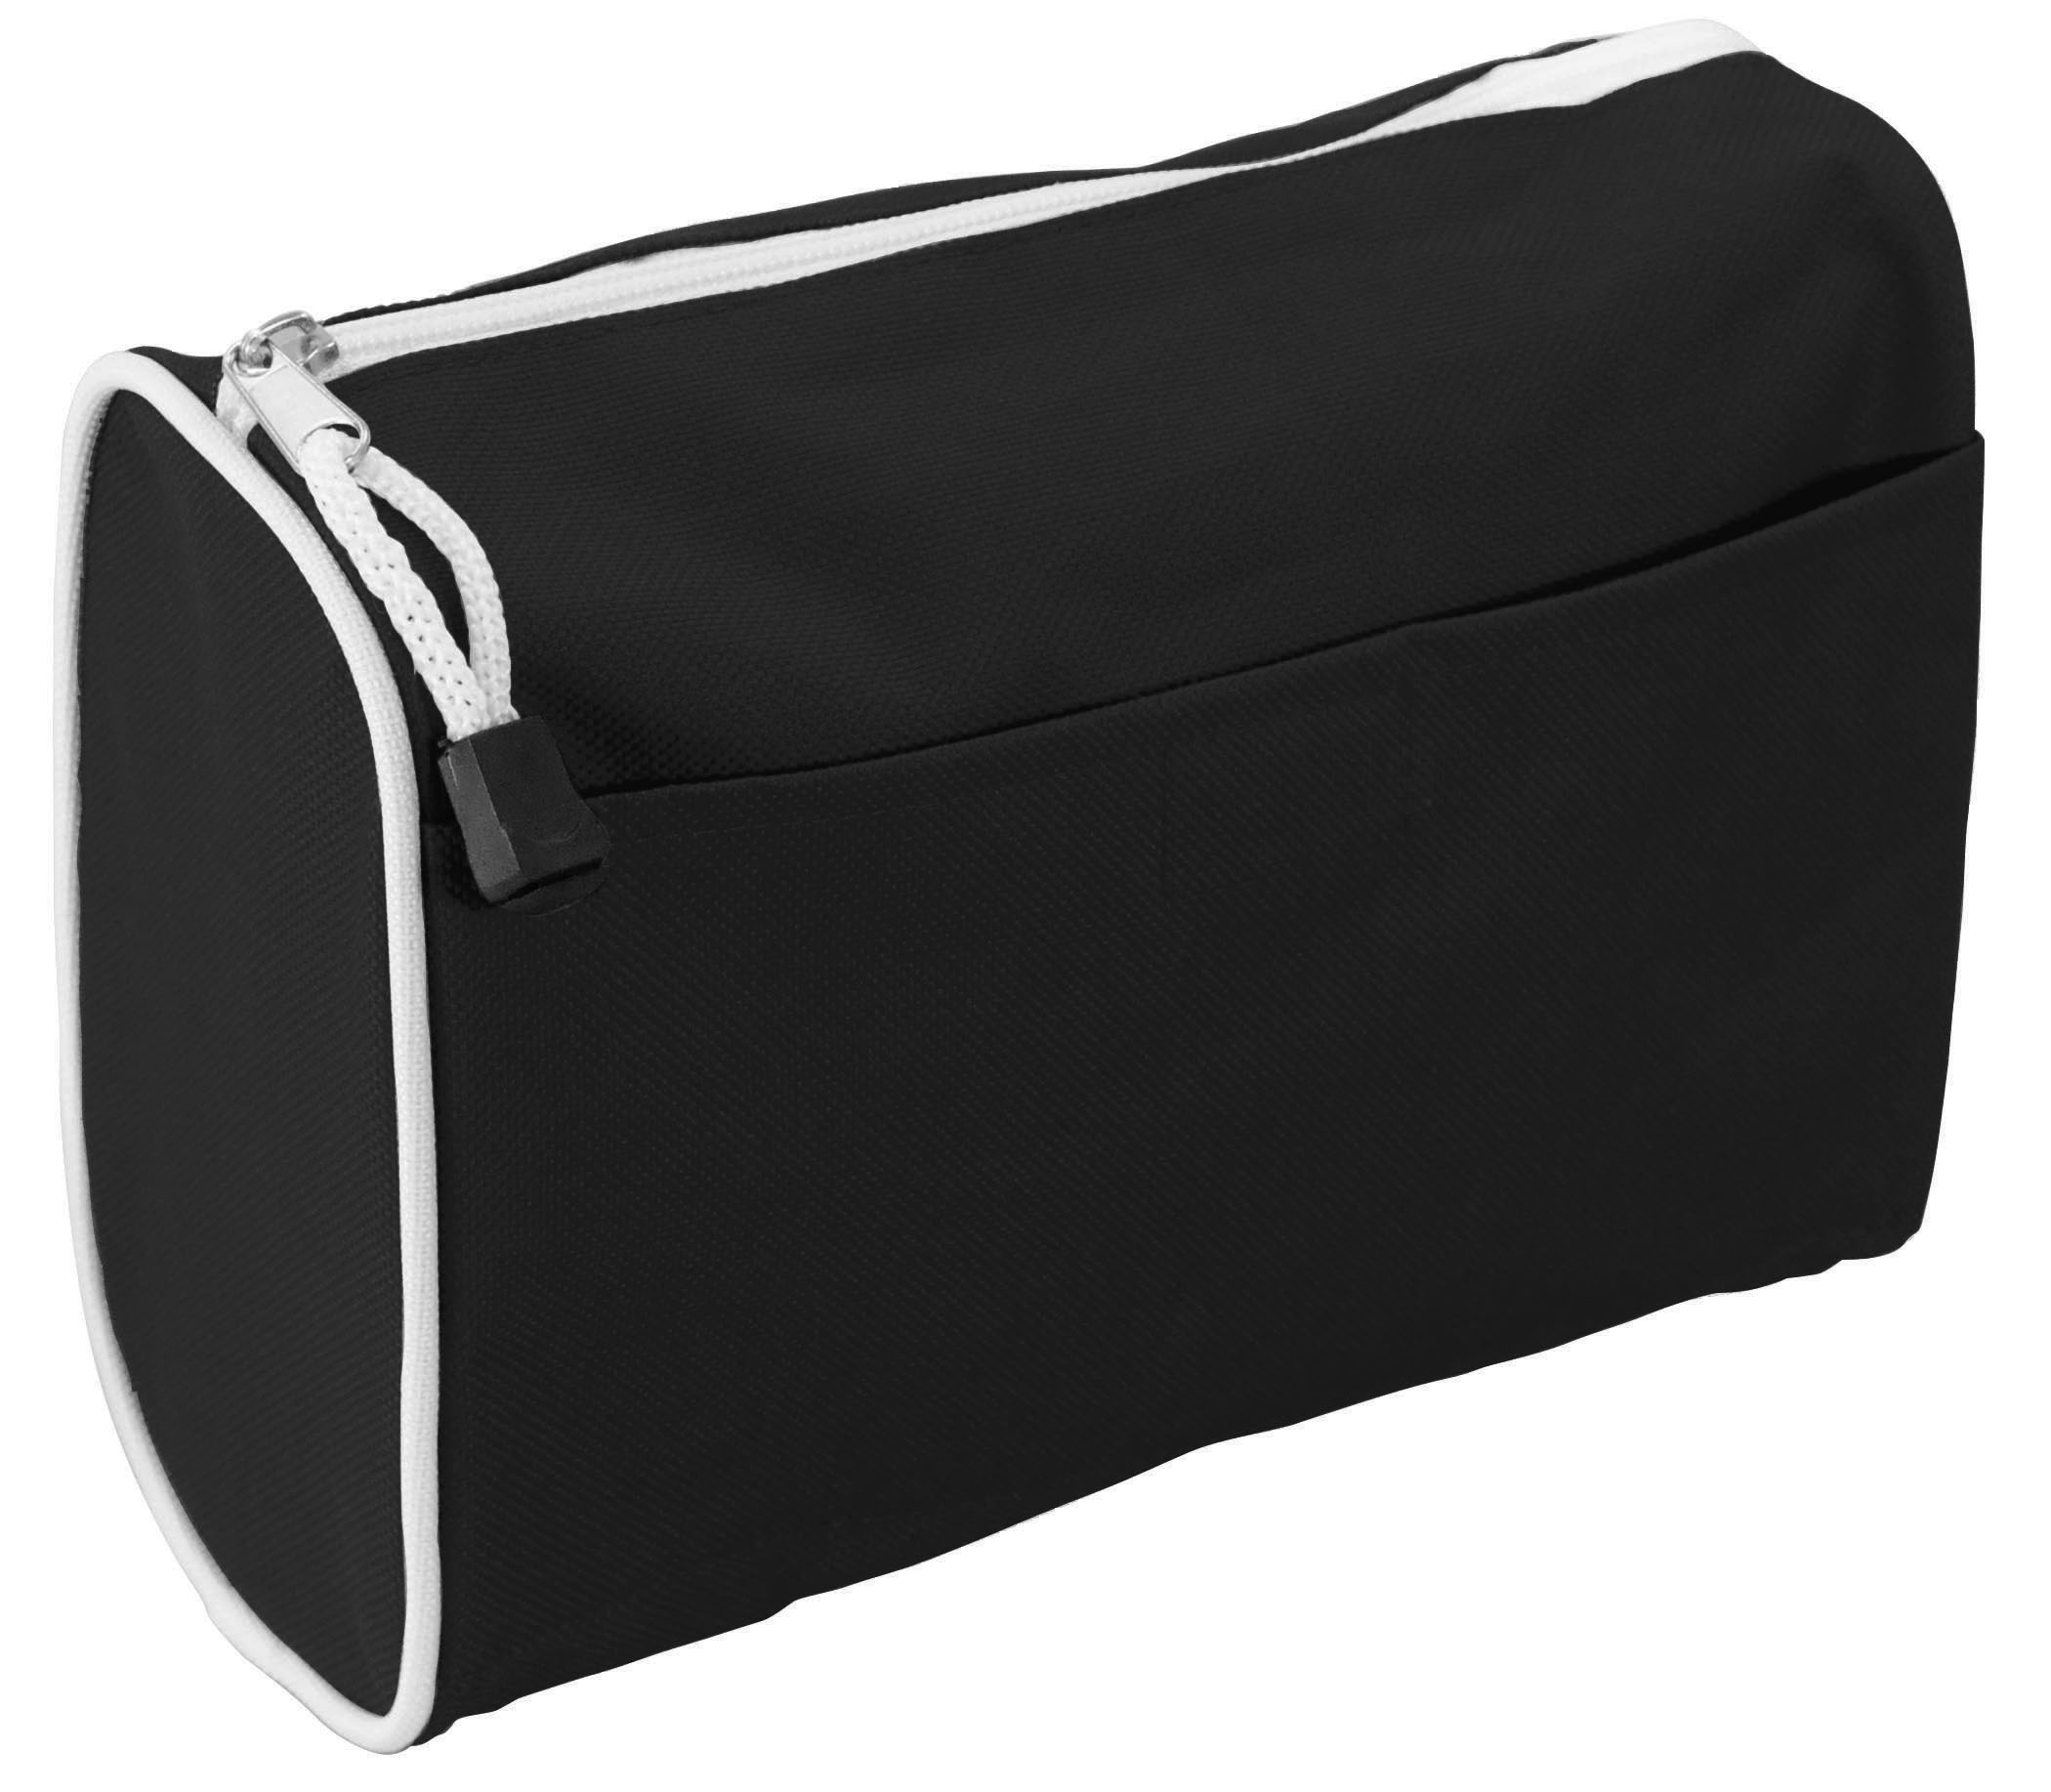 Black Tristan Amenity Bag (9"W x 6.5”D x 4”H)